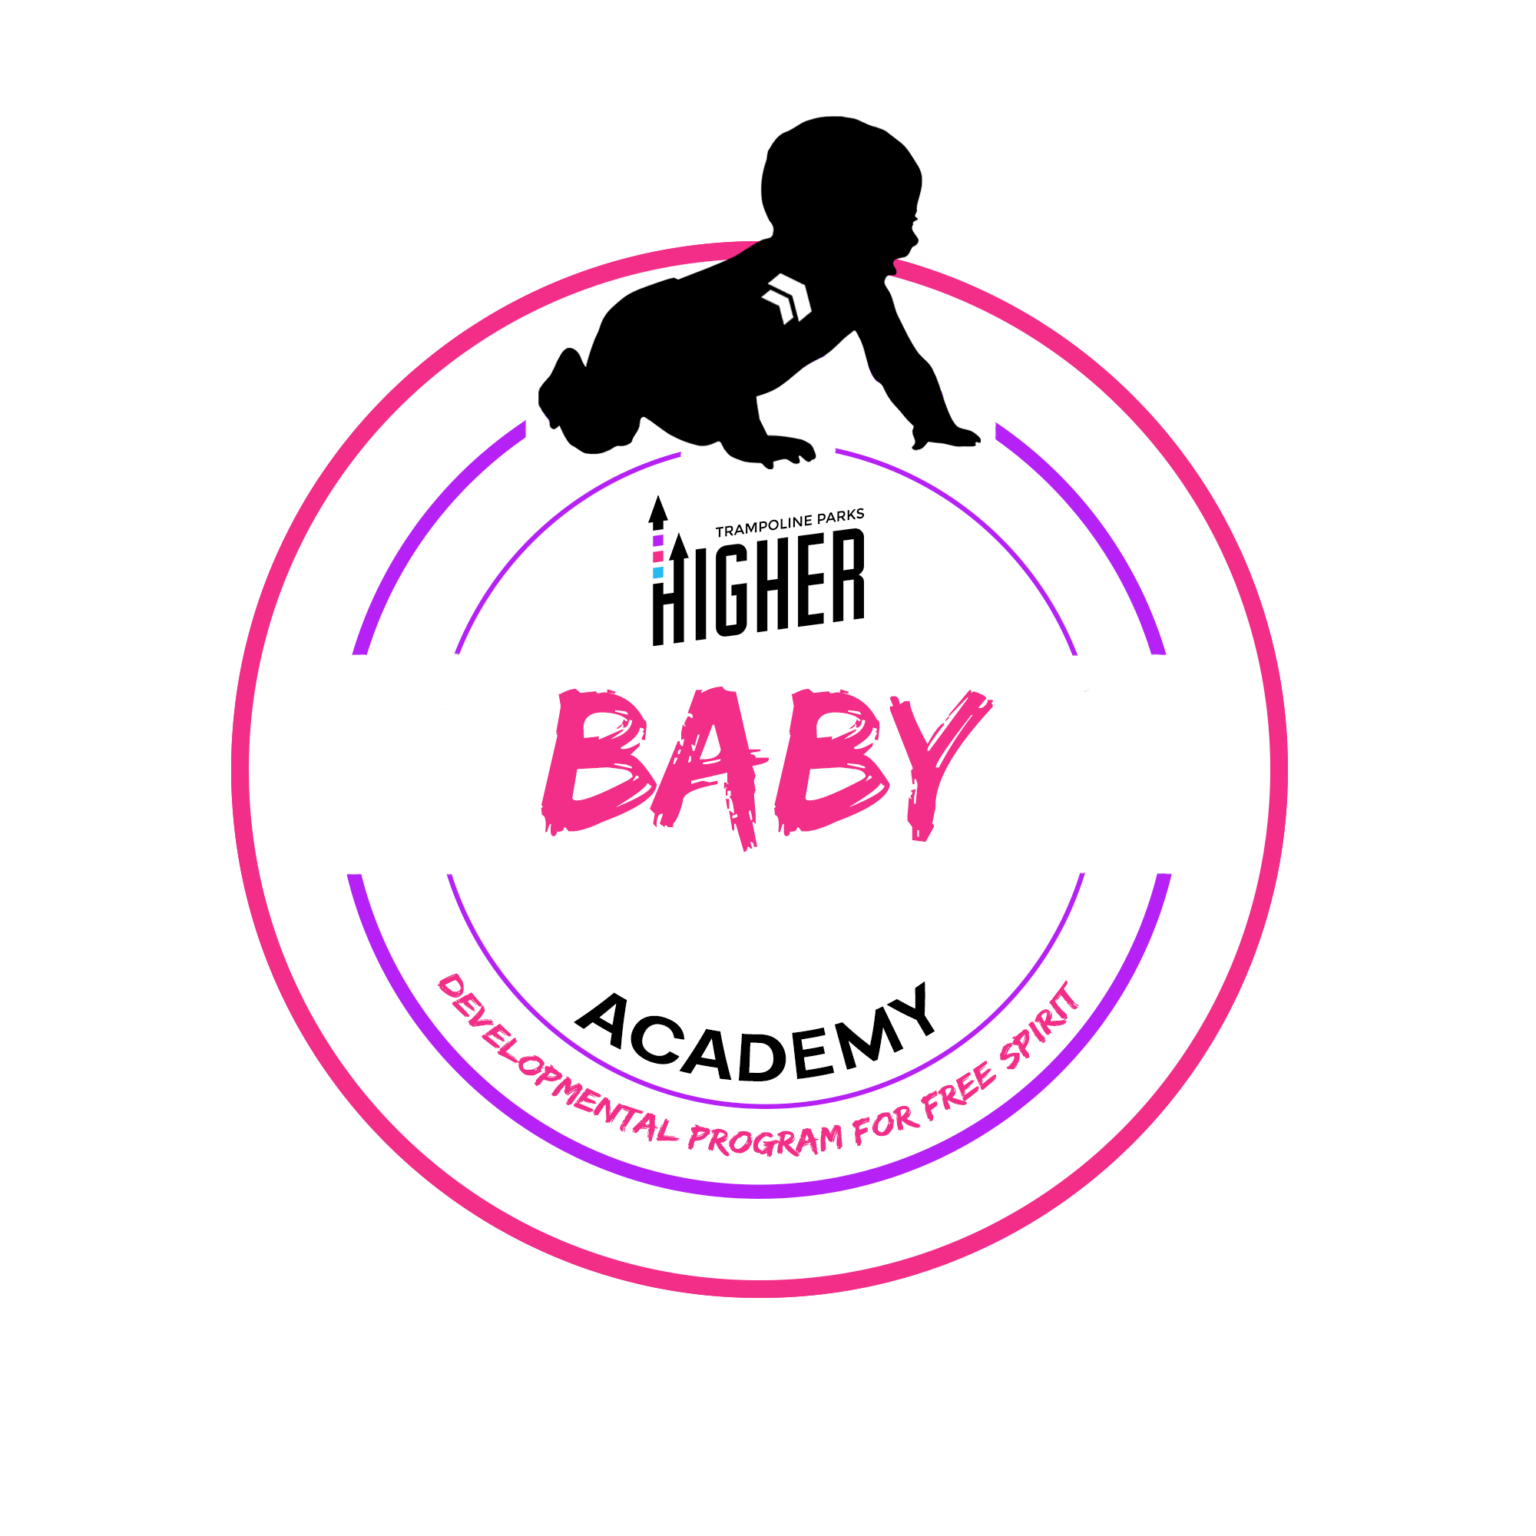 Baby academy giocomotrcitià